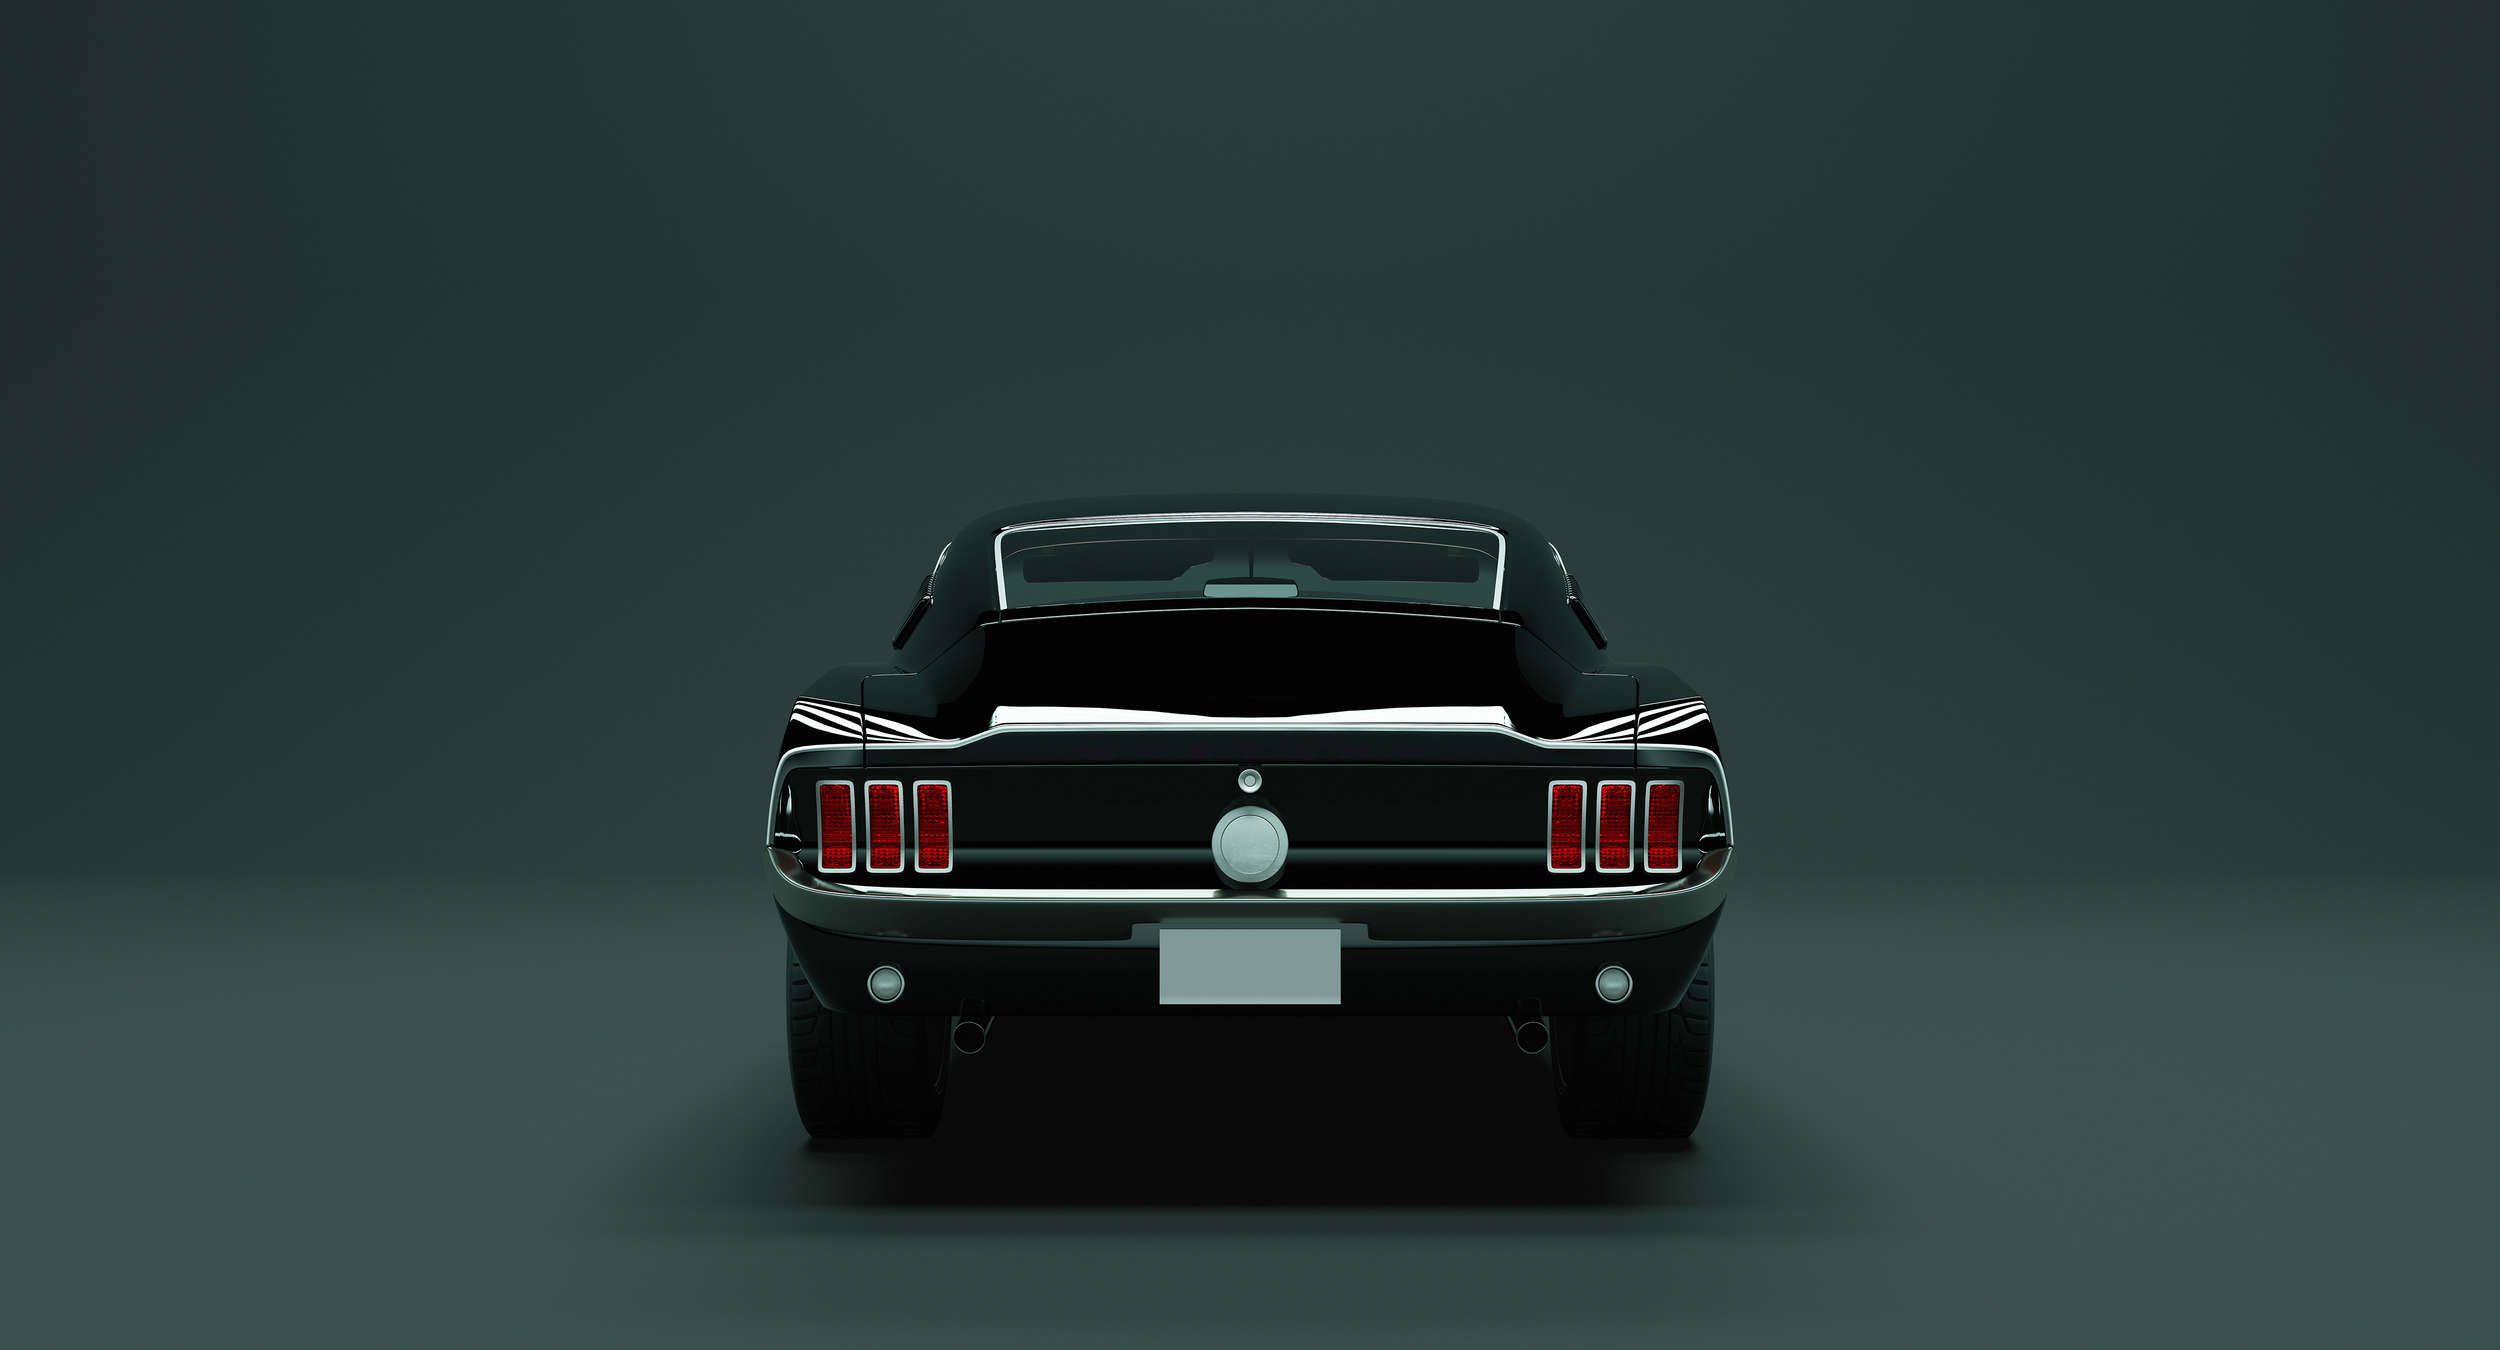             Mustang 3 - Carta da parati per auto sportive americane - Blu, Nero | Pile liscio opaco
        